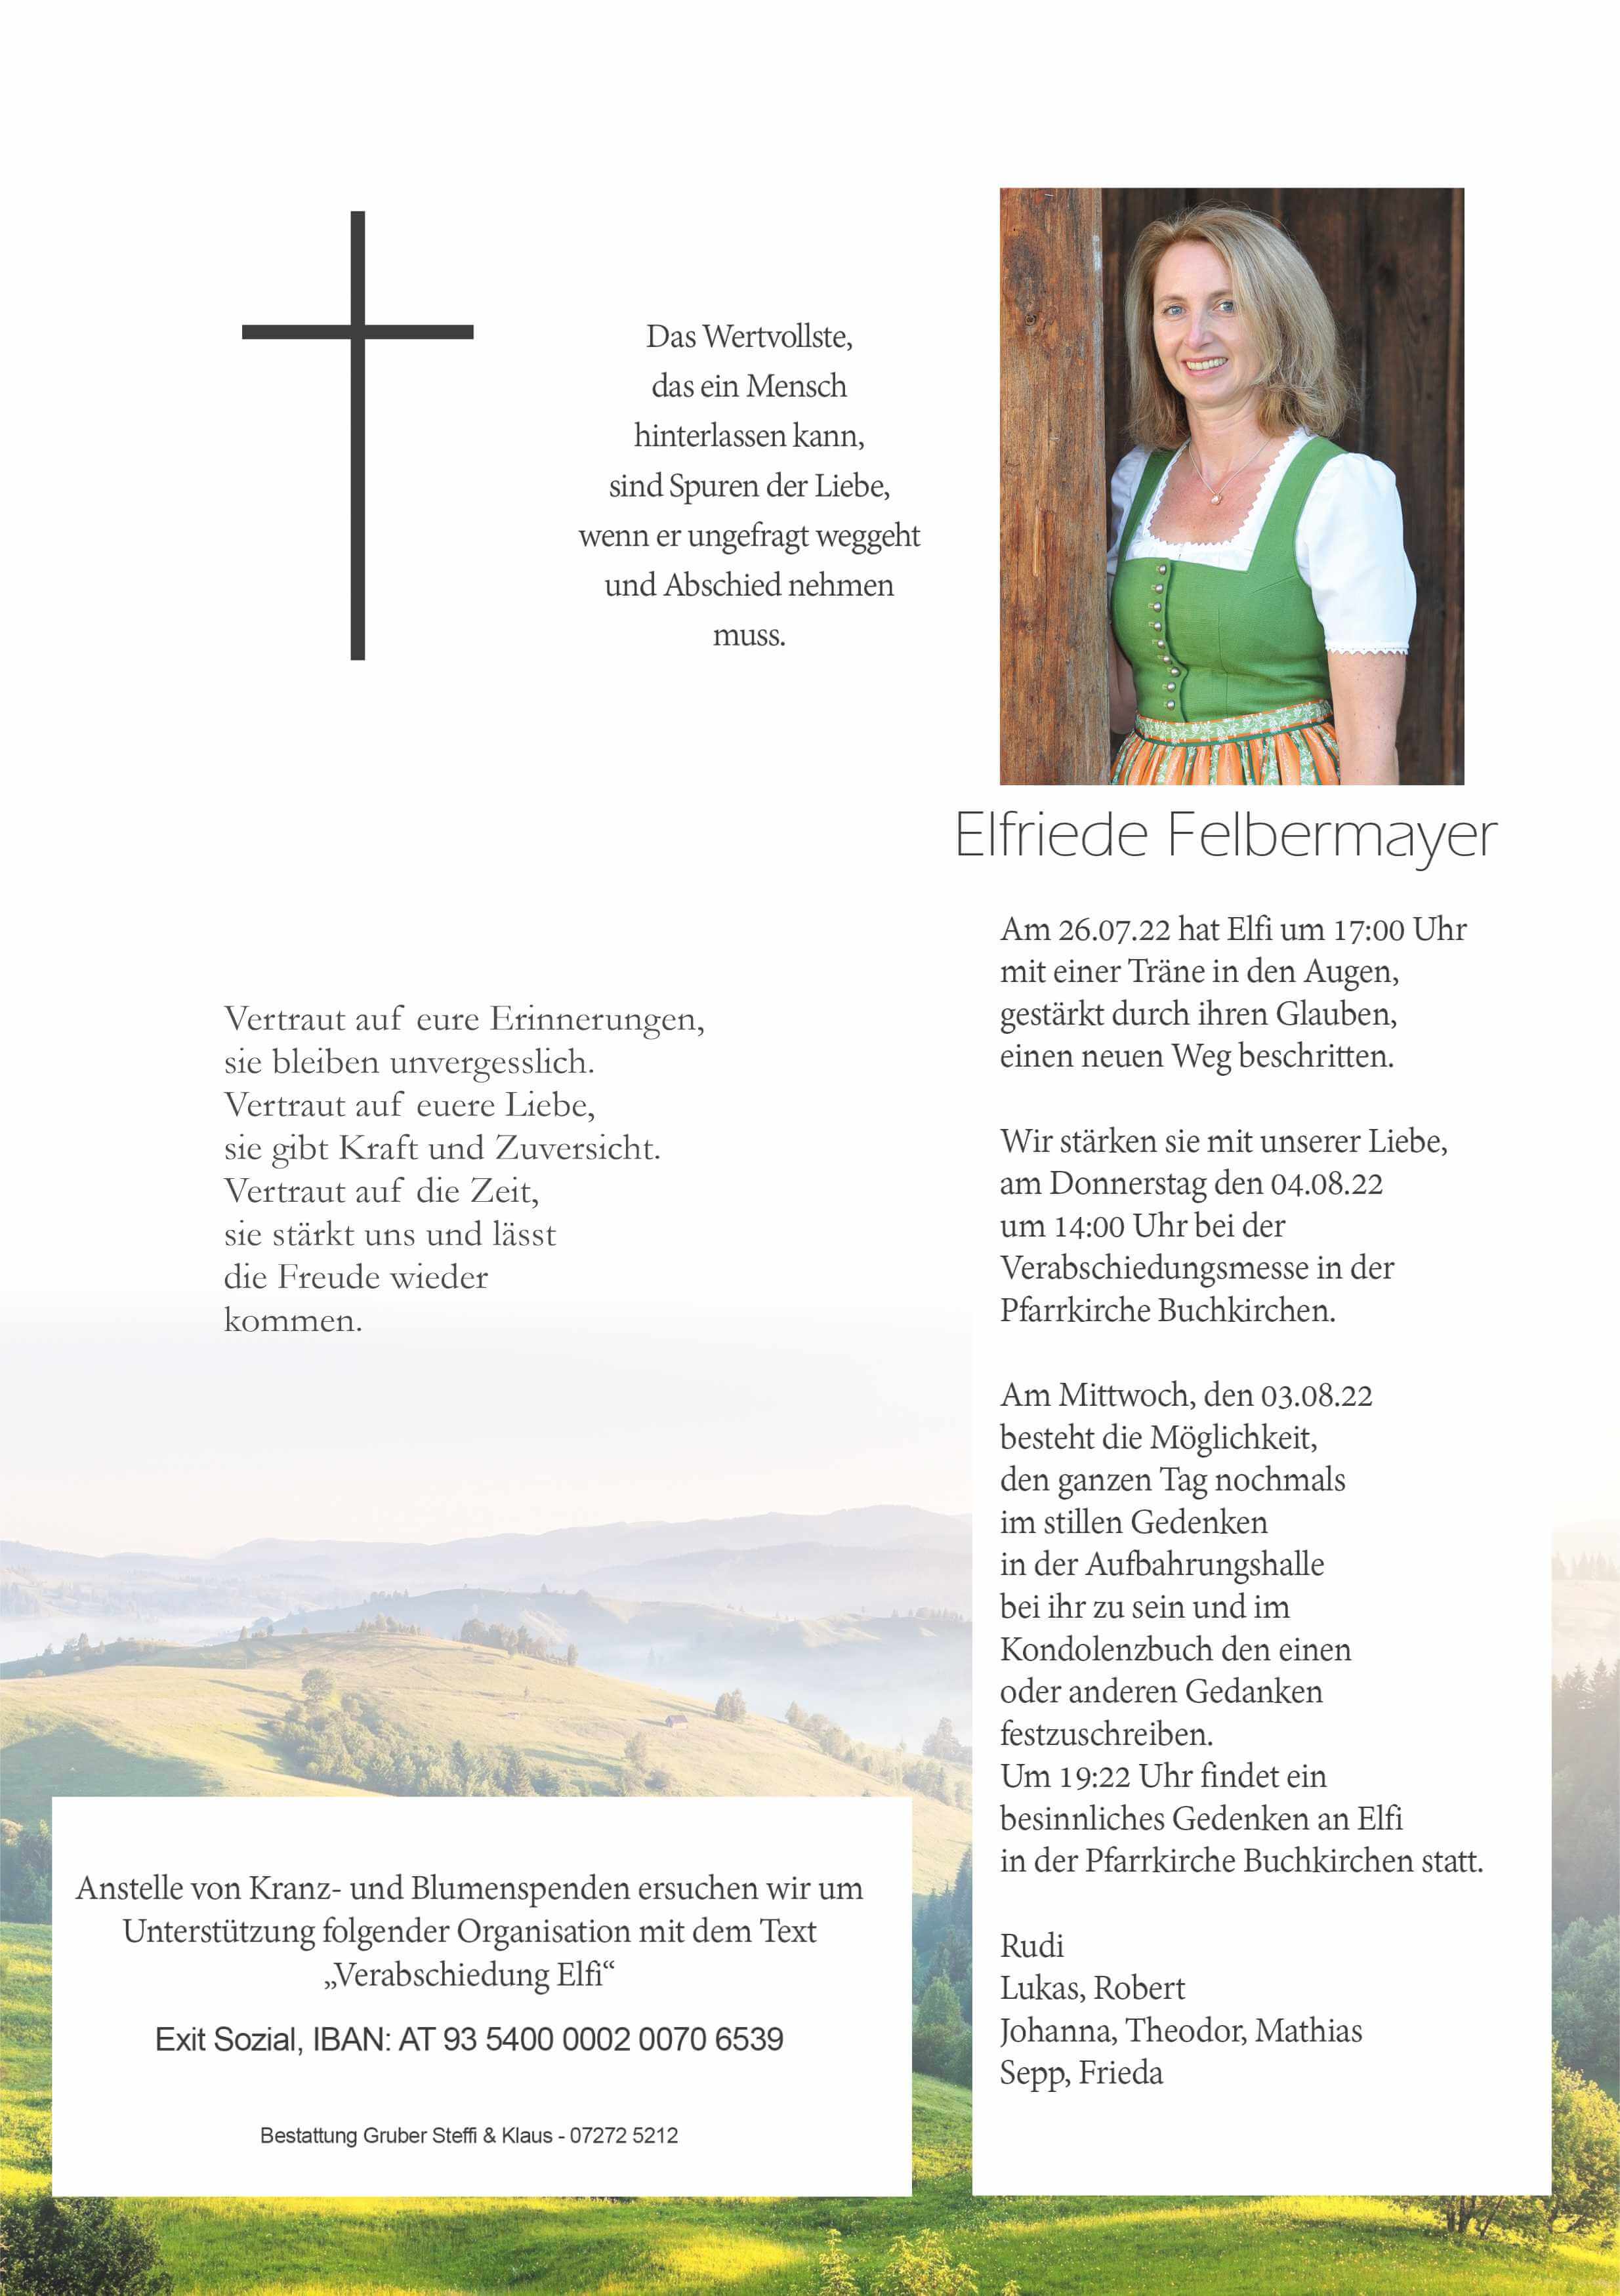 Elfriede Felbermayer (Buchkirchen)